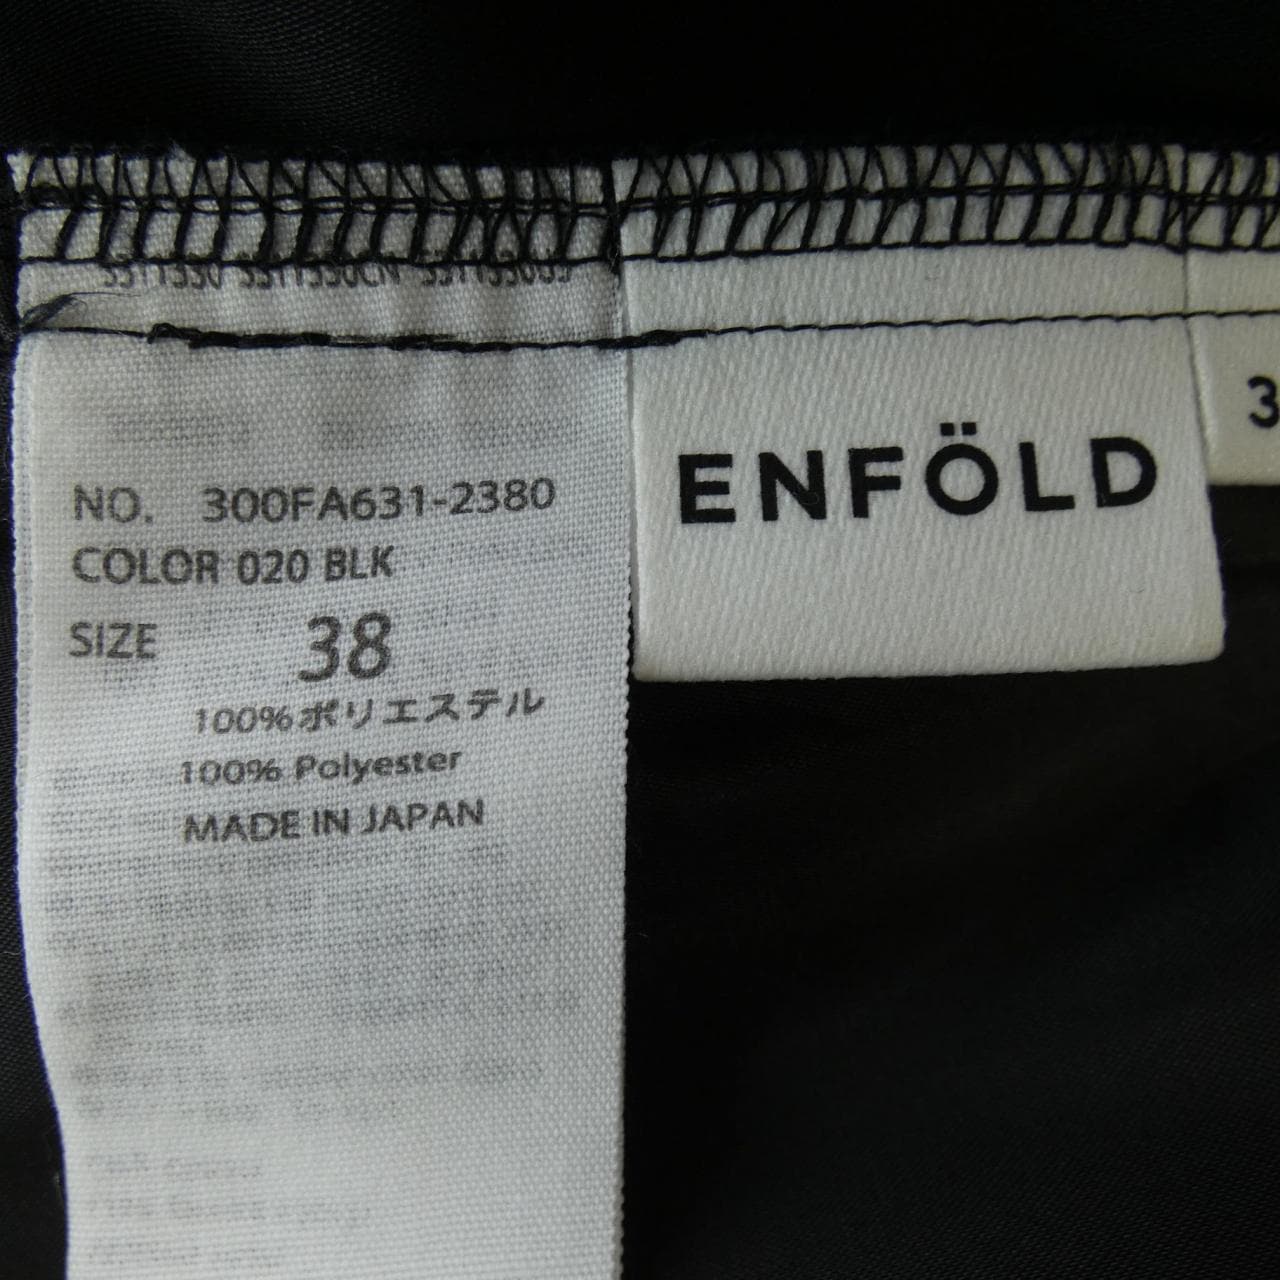 Enford ENFOLD褲